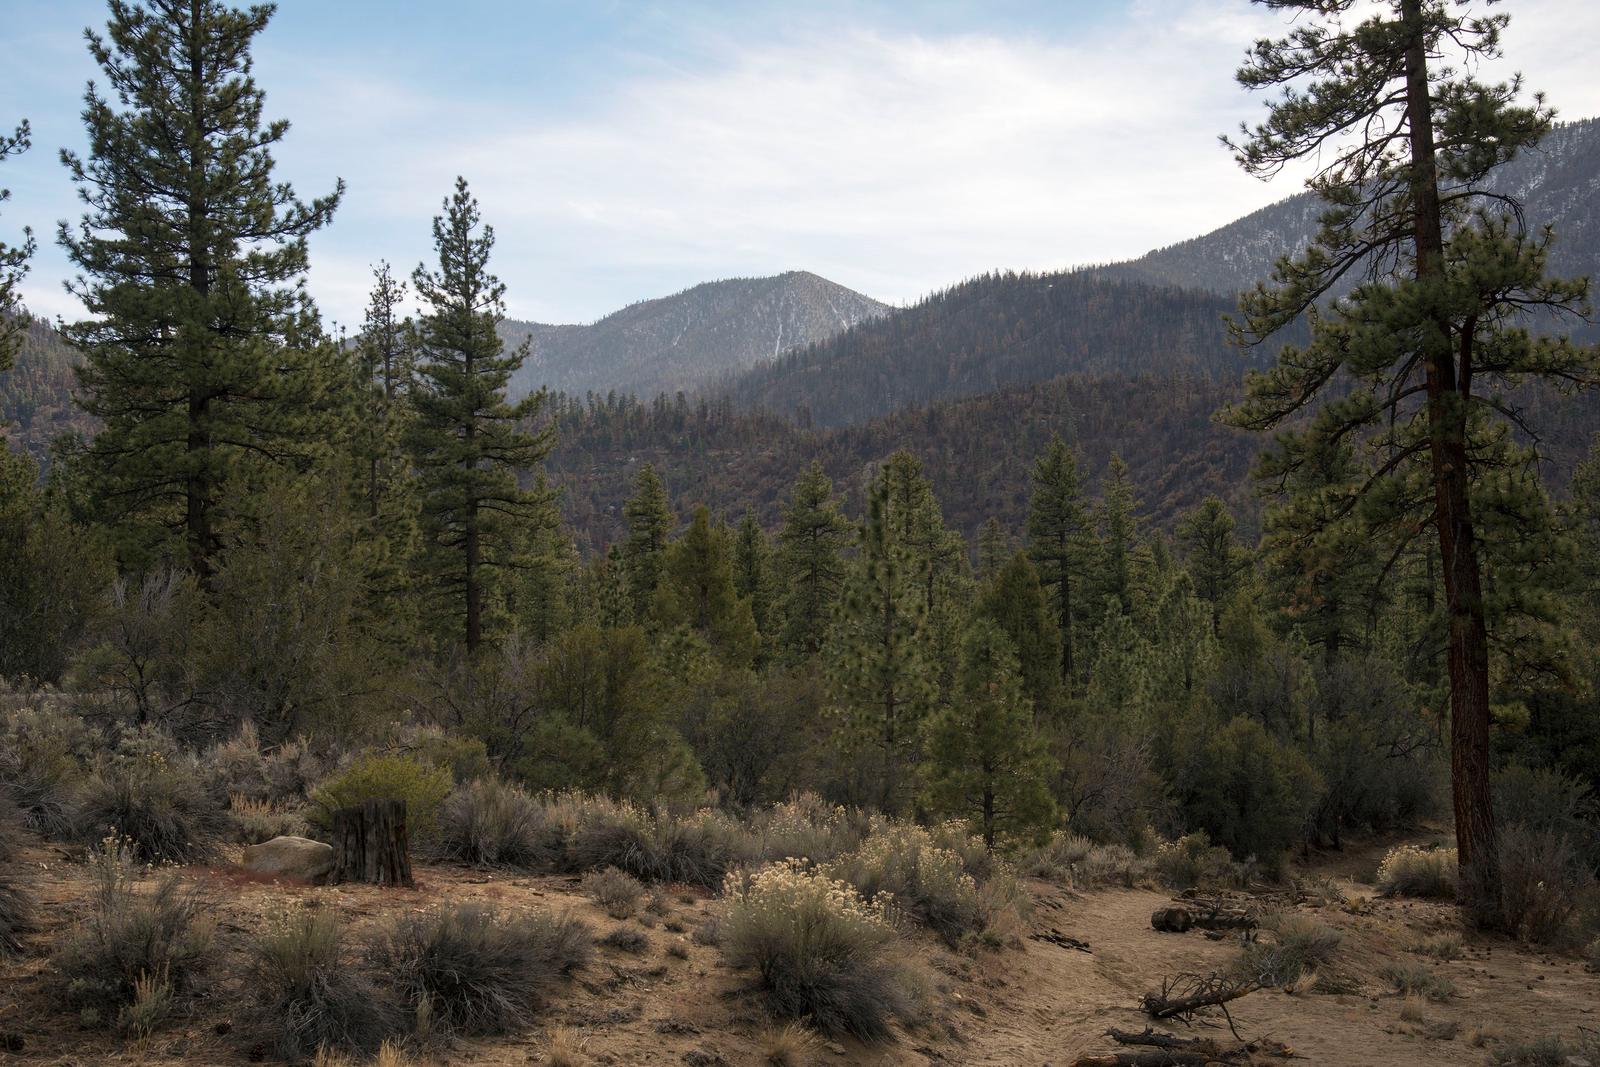 Preview photo of San Bernardino National Forest